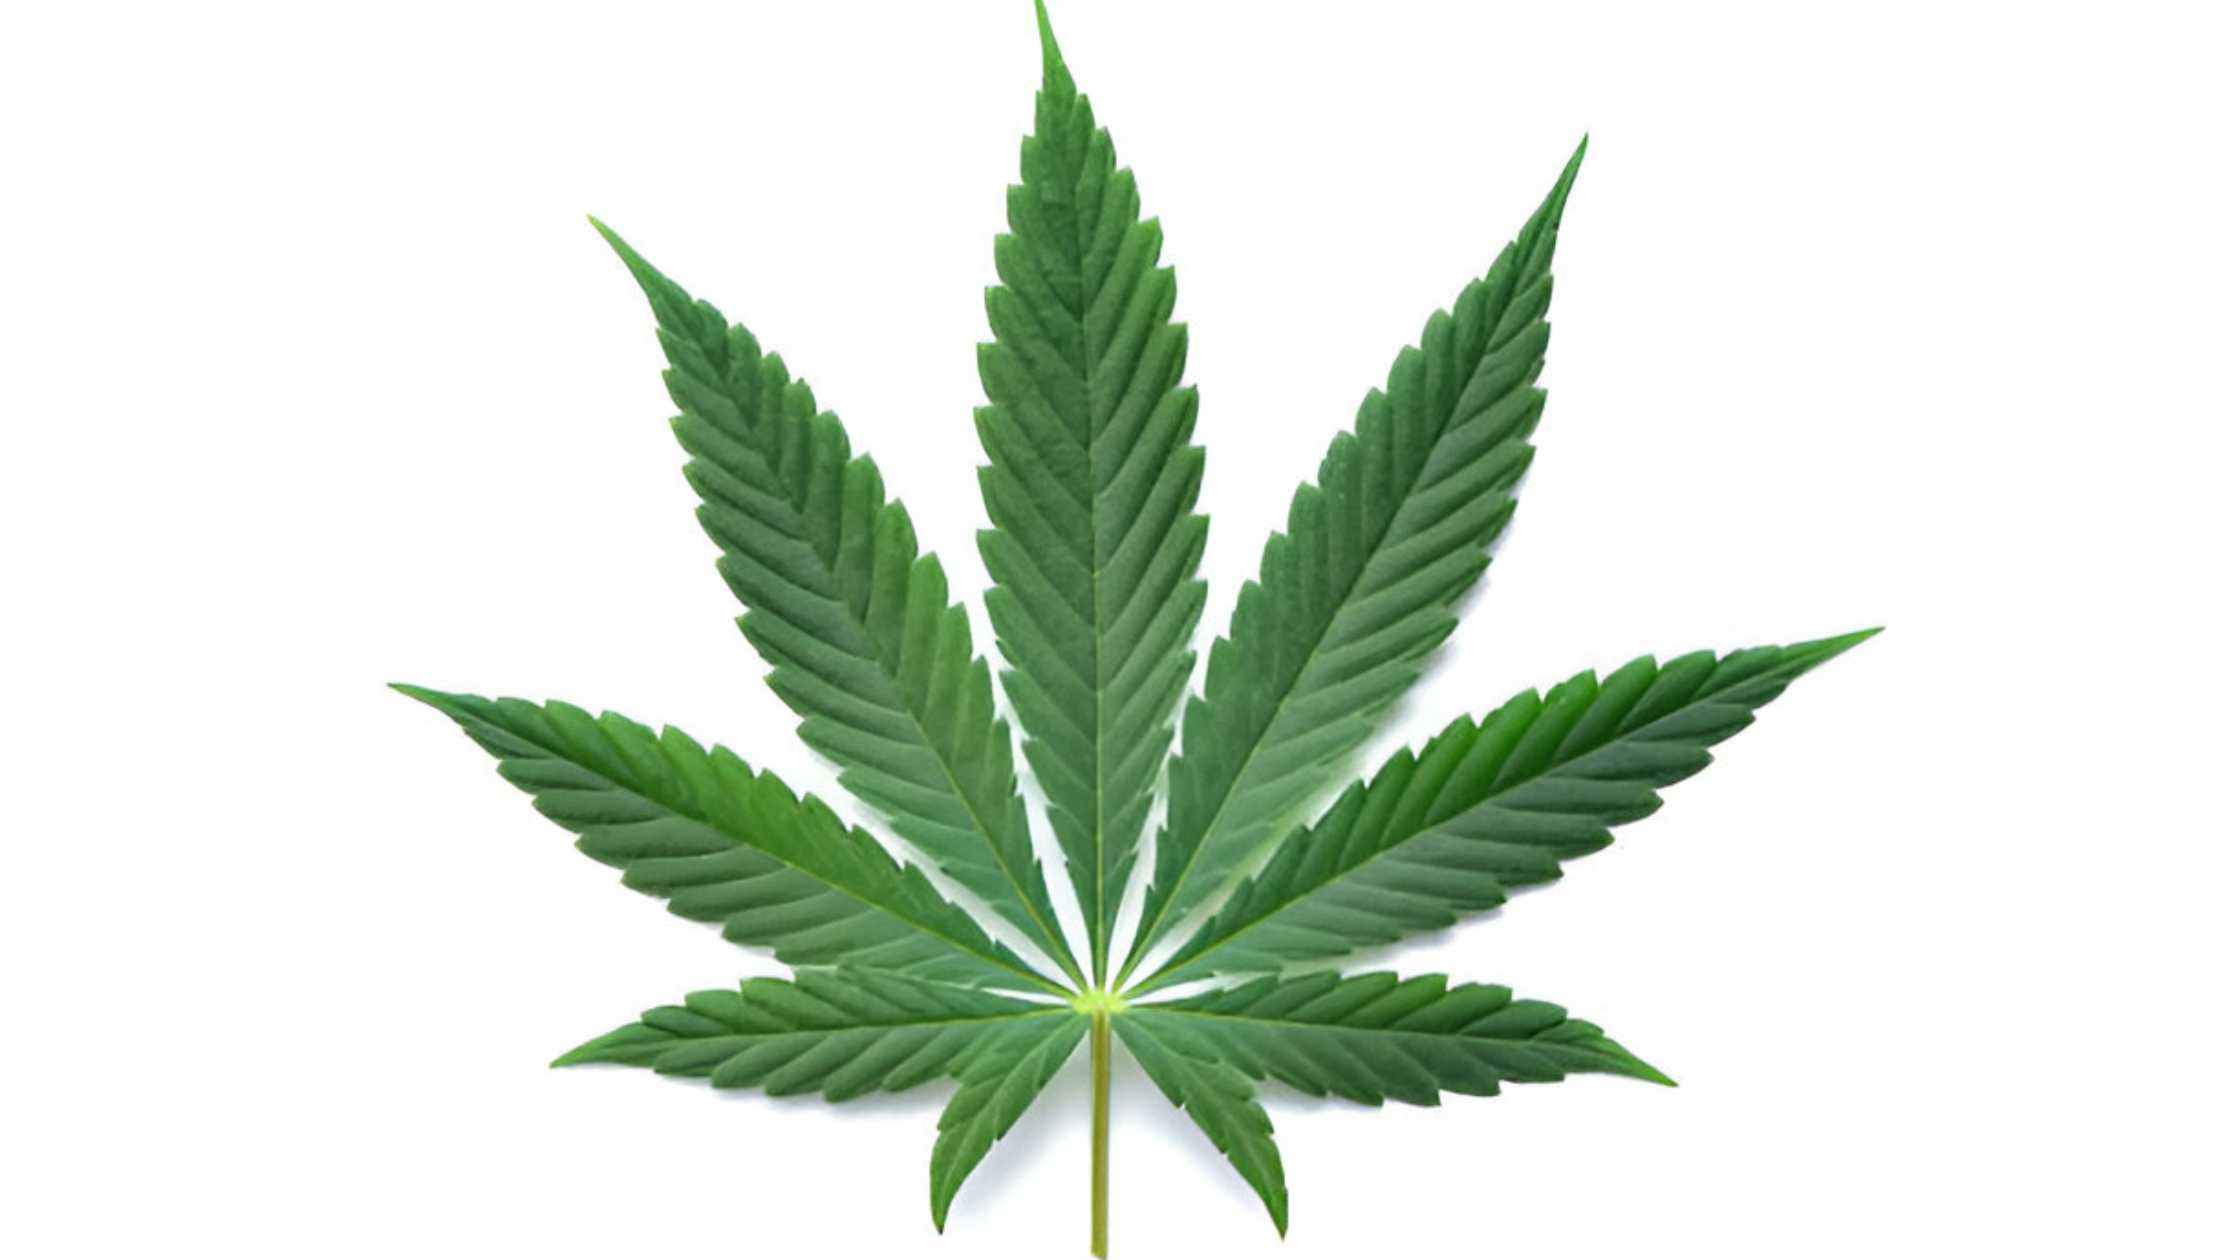 Cities in Colorado, Rhode Island Discard Recreational Cannabis